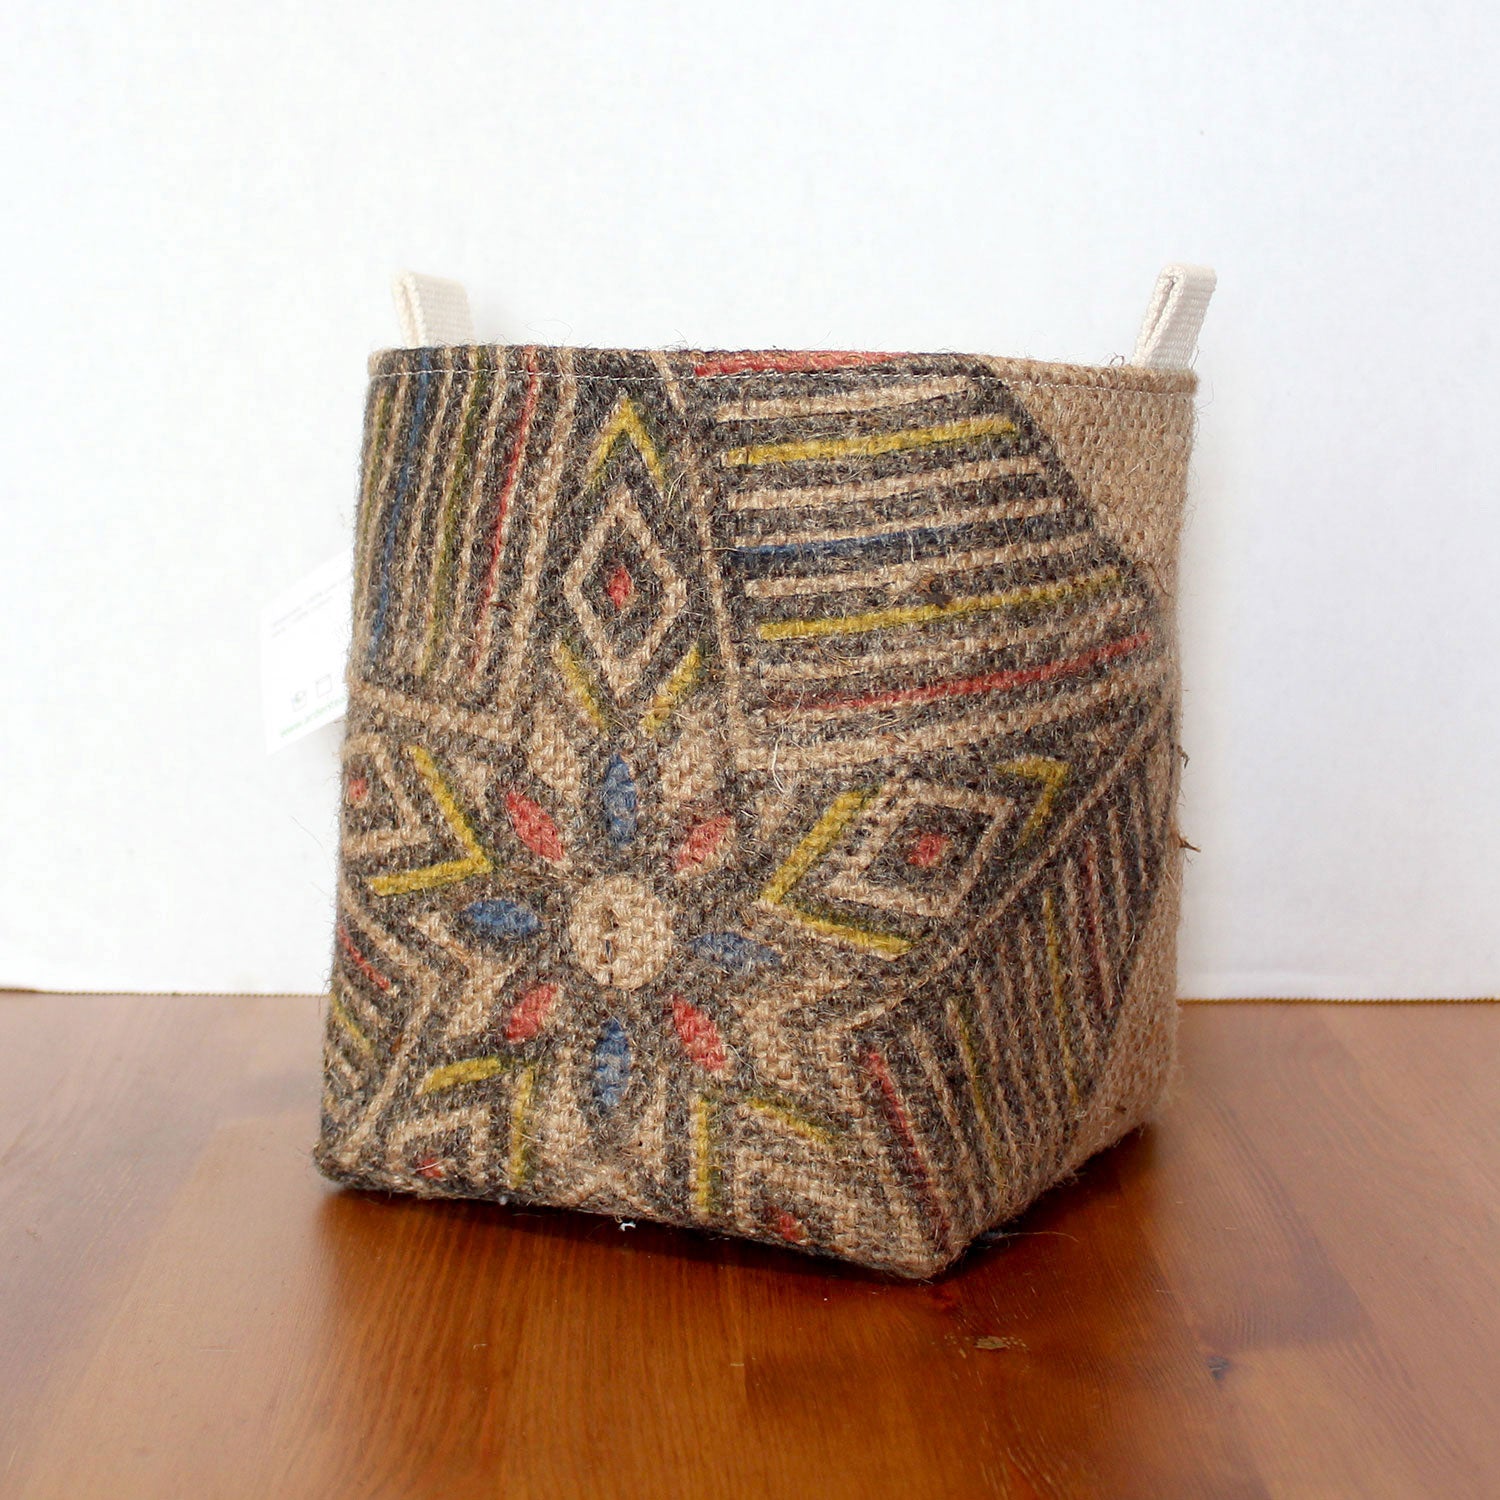 Upcycled Coffee Sack Basket - Medium - geometric